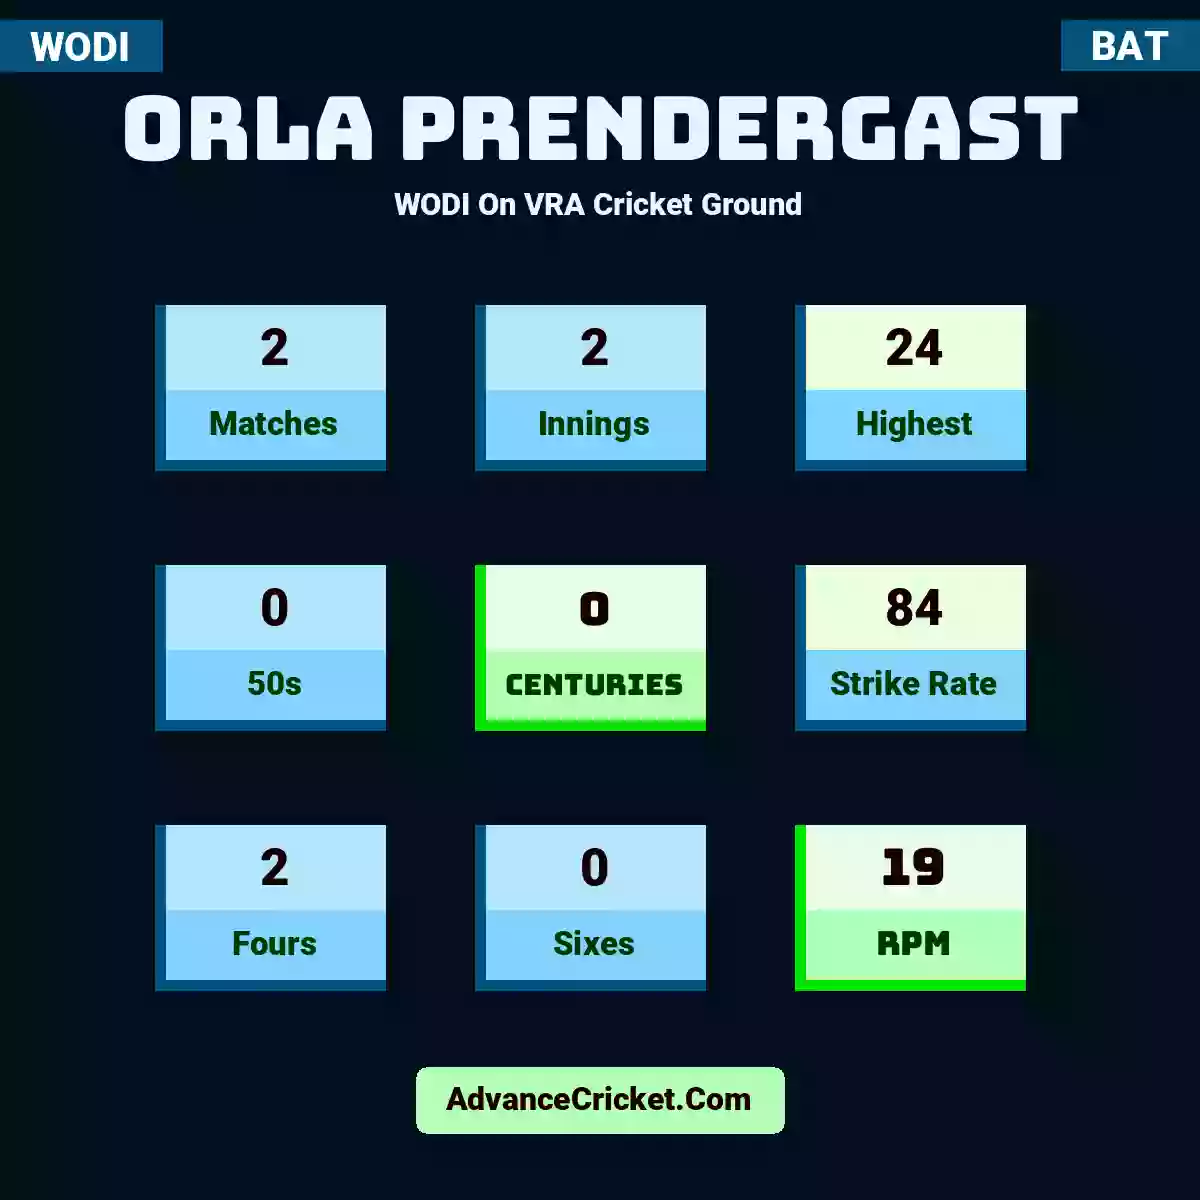 Orla Prendergast WODI  On VRA Cricket Ground, Orla Prendergast played 2 matches, scored 24 runs as highest, 0 half-centuries, and 0 centuries, with a strike rate of 84. O.Prendergast hit 2 fours and 0 sixes, with an RPM of 19.